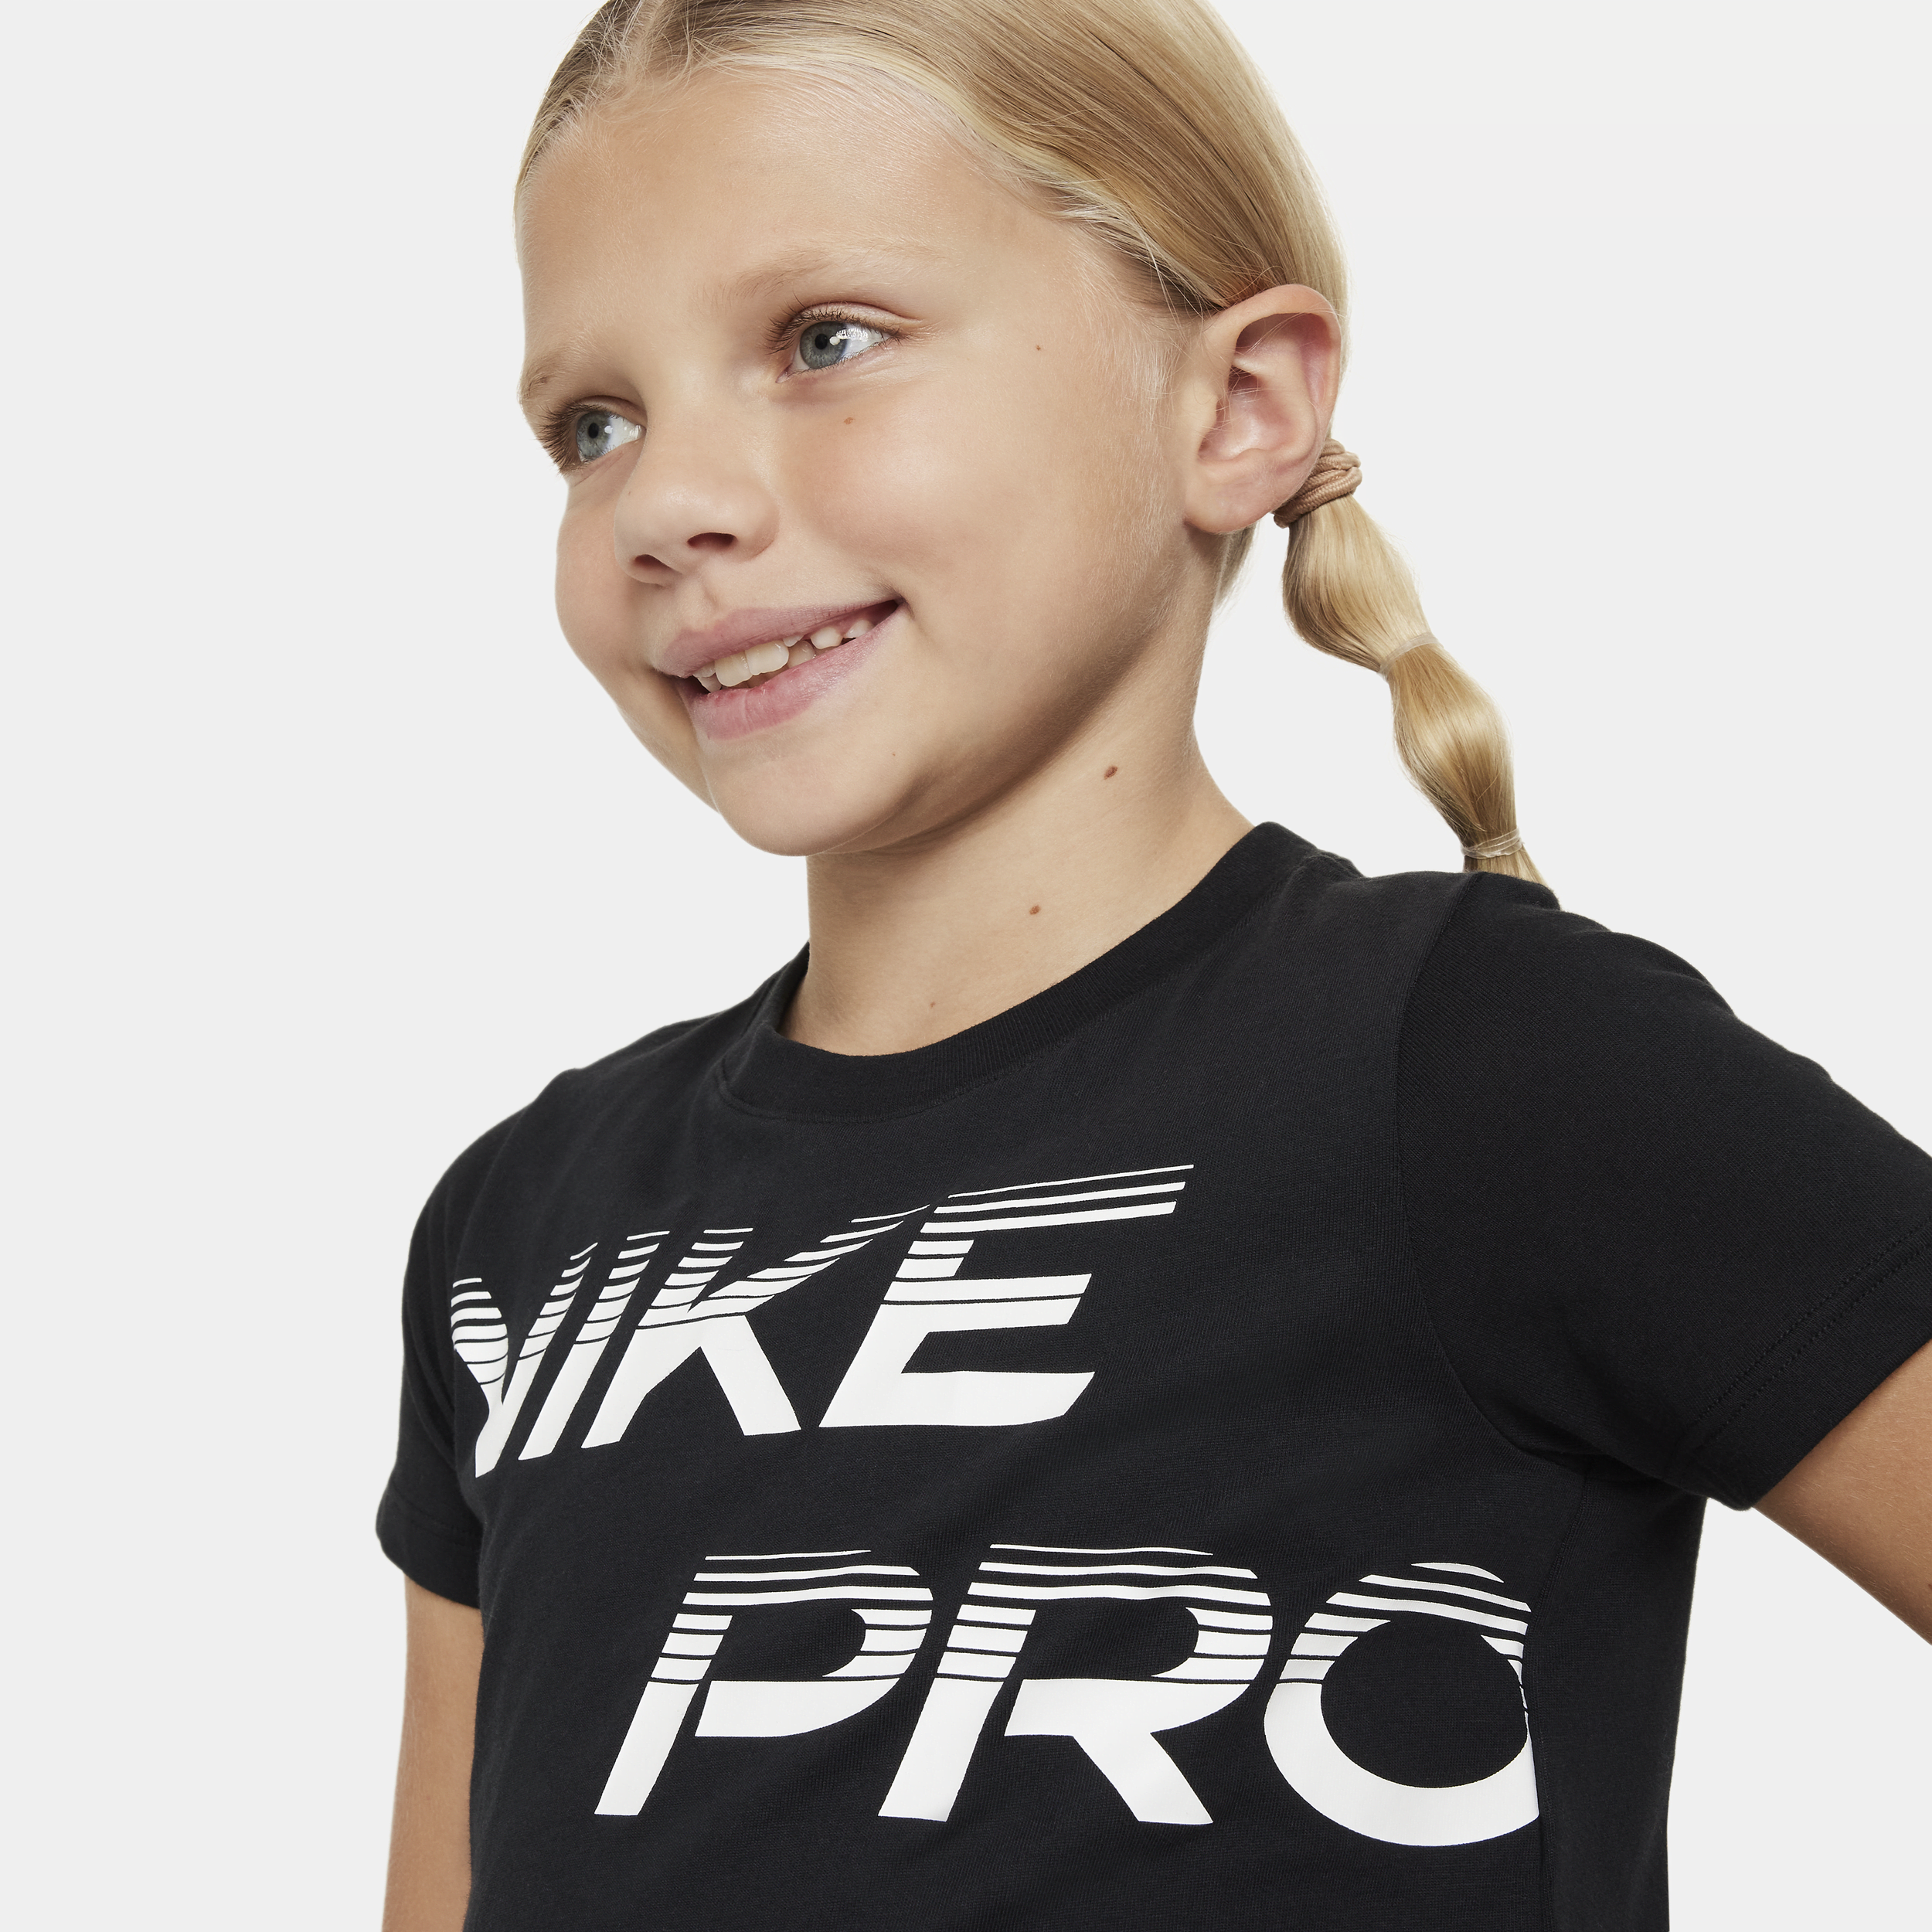 Nike Pro Dri-FIT kort T-shirt voor meisjes Zwart